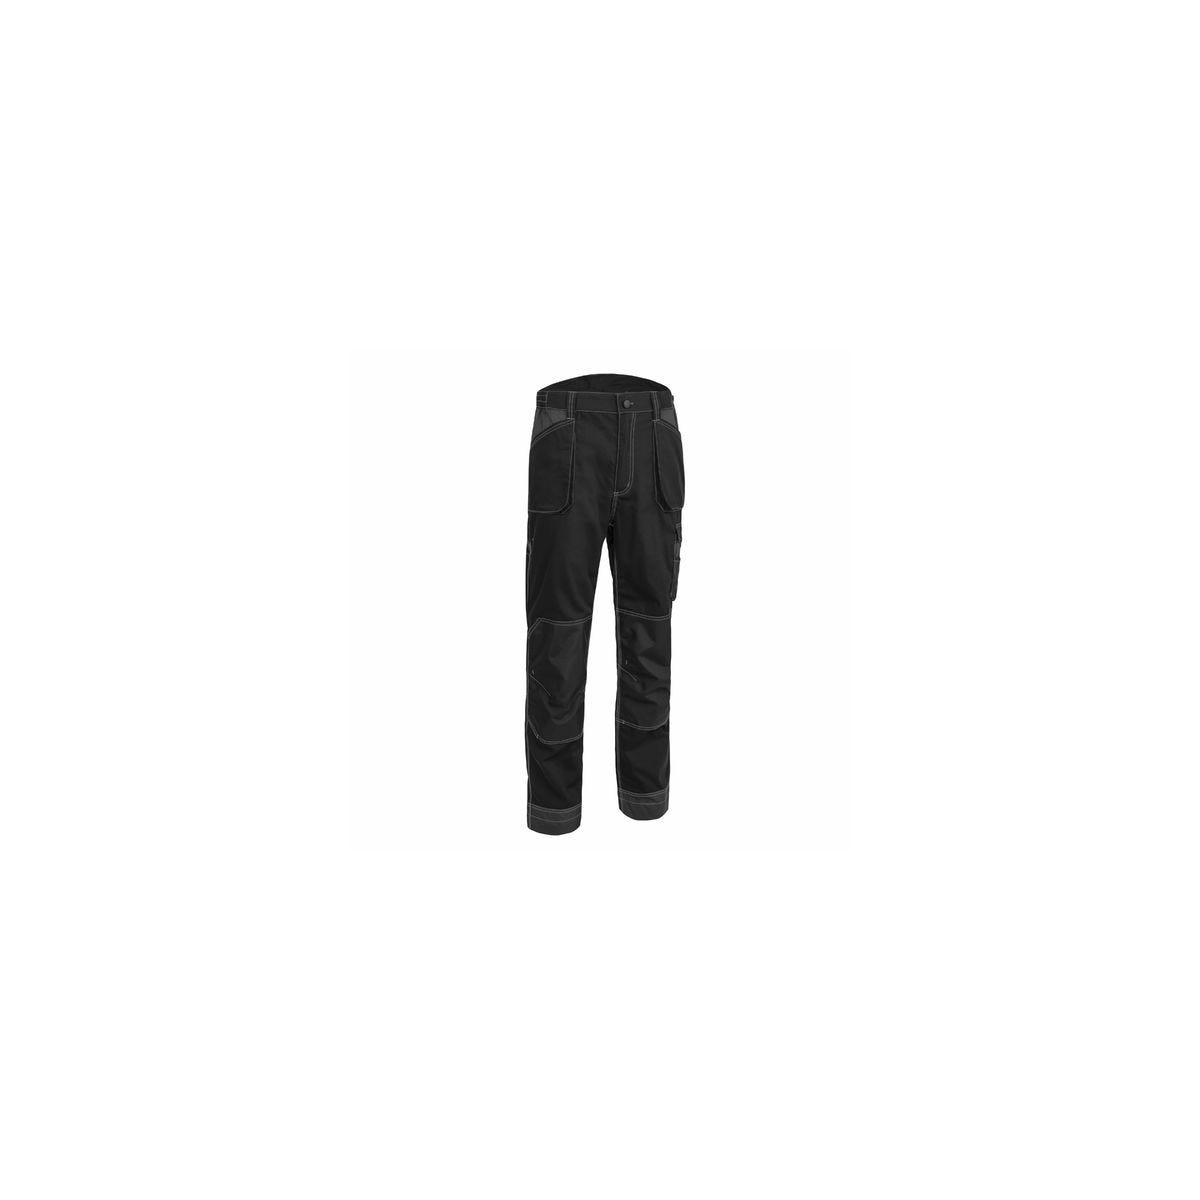 Pantalon OROSI Noir - COVERGUARD - Taille S 0